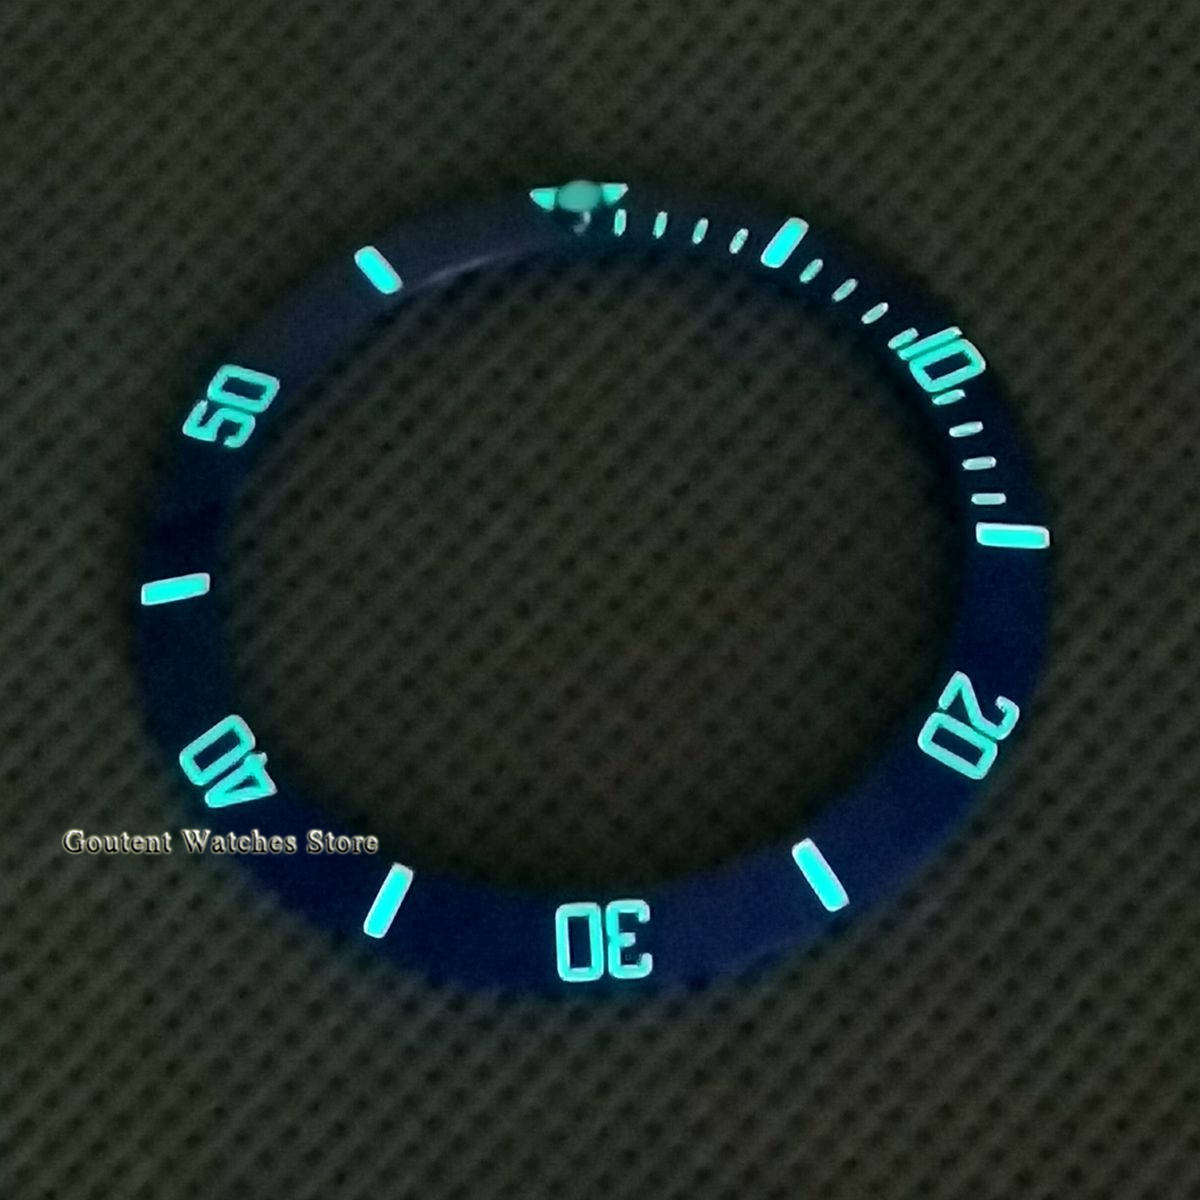 New 38mm Super Blue Luminous High Quality Watch Bezel Insert Blue Ceramic Bezel Ring Insert Watch Parts Fits For 40mm Watches